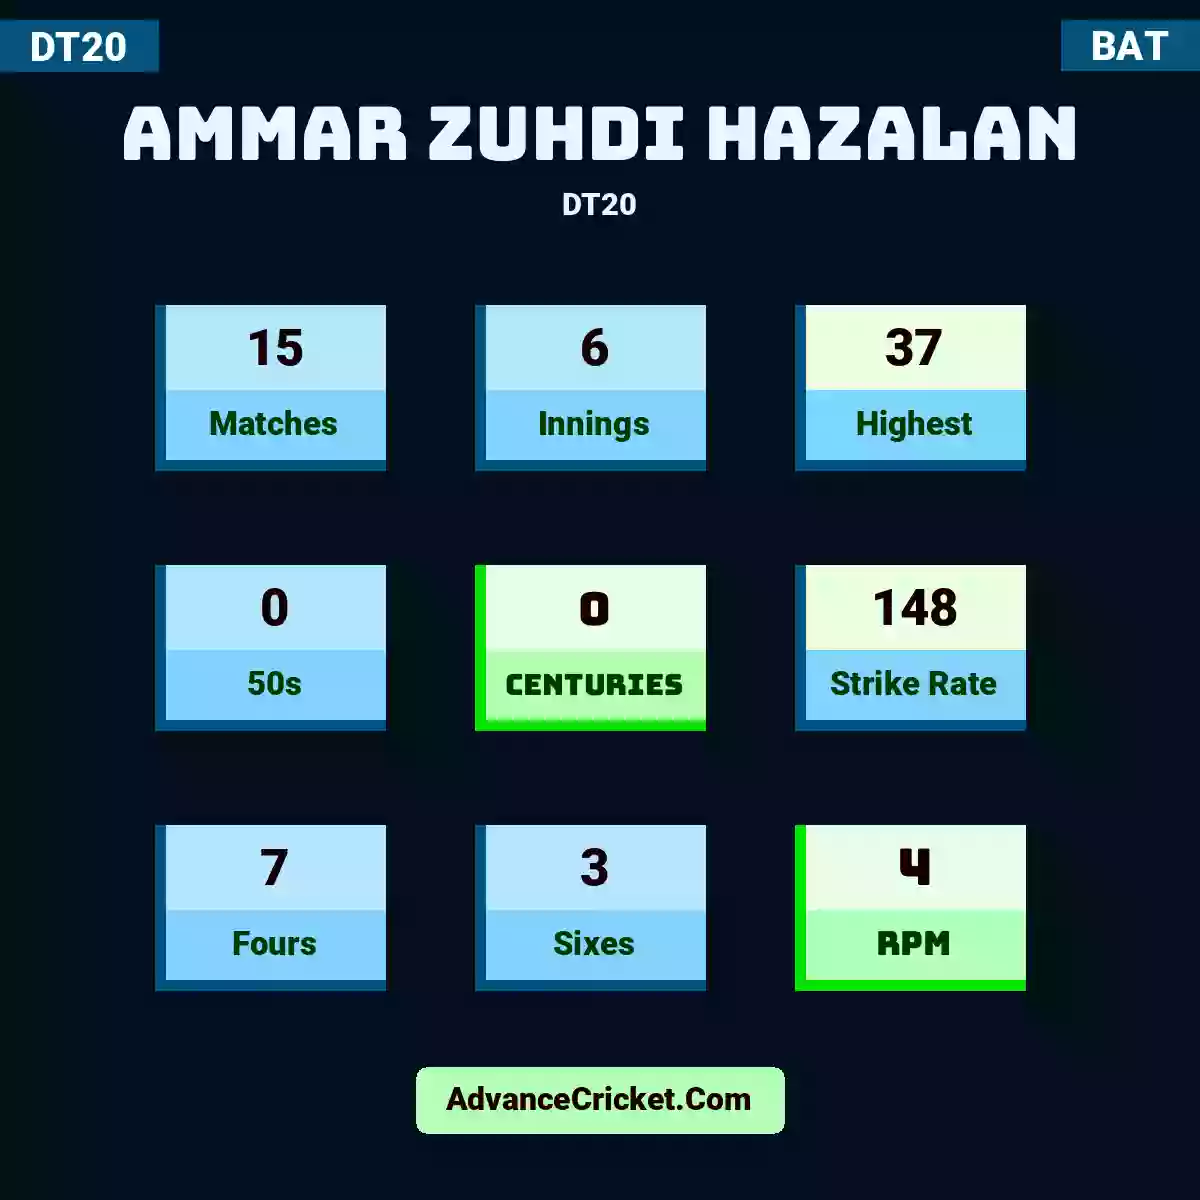 Ammar Zuhdi Hazalan DT20 , Ammar Zuhdi Hazalan played 15 matches, scored 37 runs as highest, 0 half-centuries, and 0 centuries, with a strike rate of 148. A.Zuhdi.Hazalan hit 7 fours and 3 sixes, with an RPM of 4.